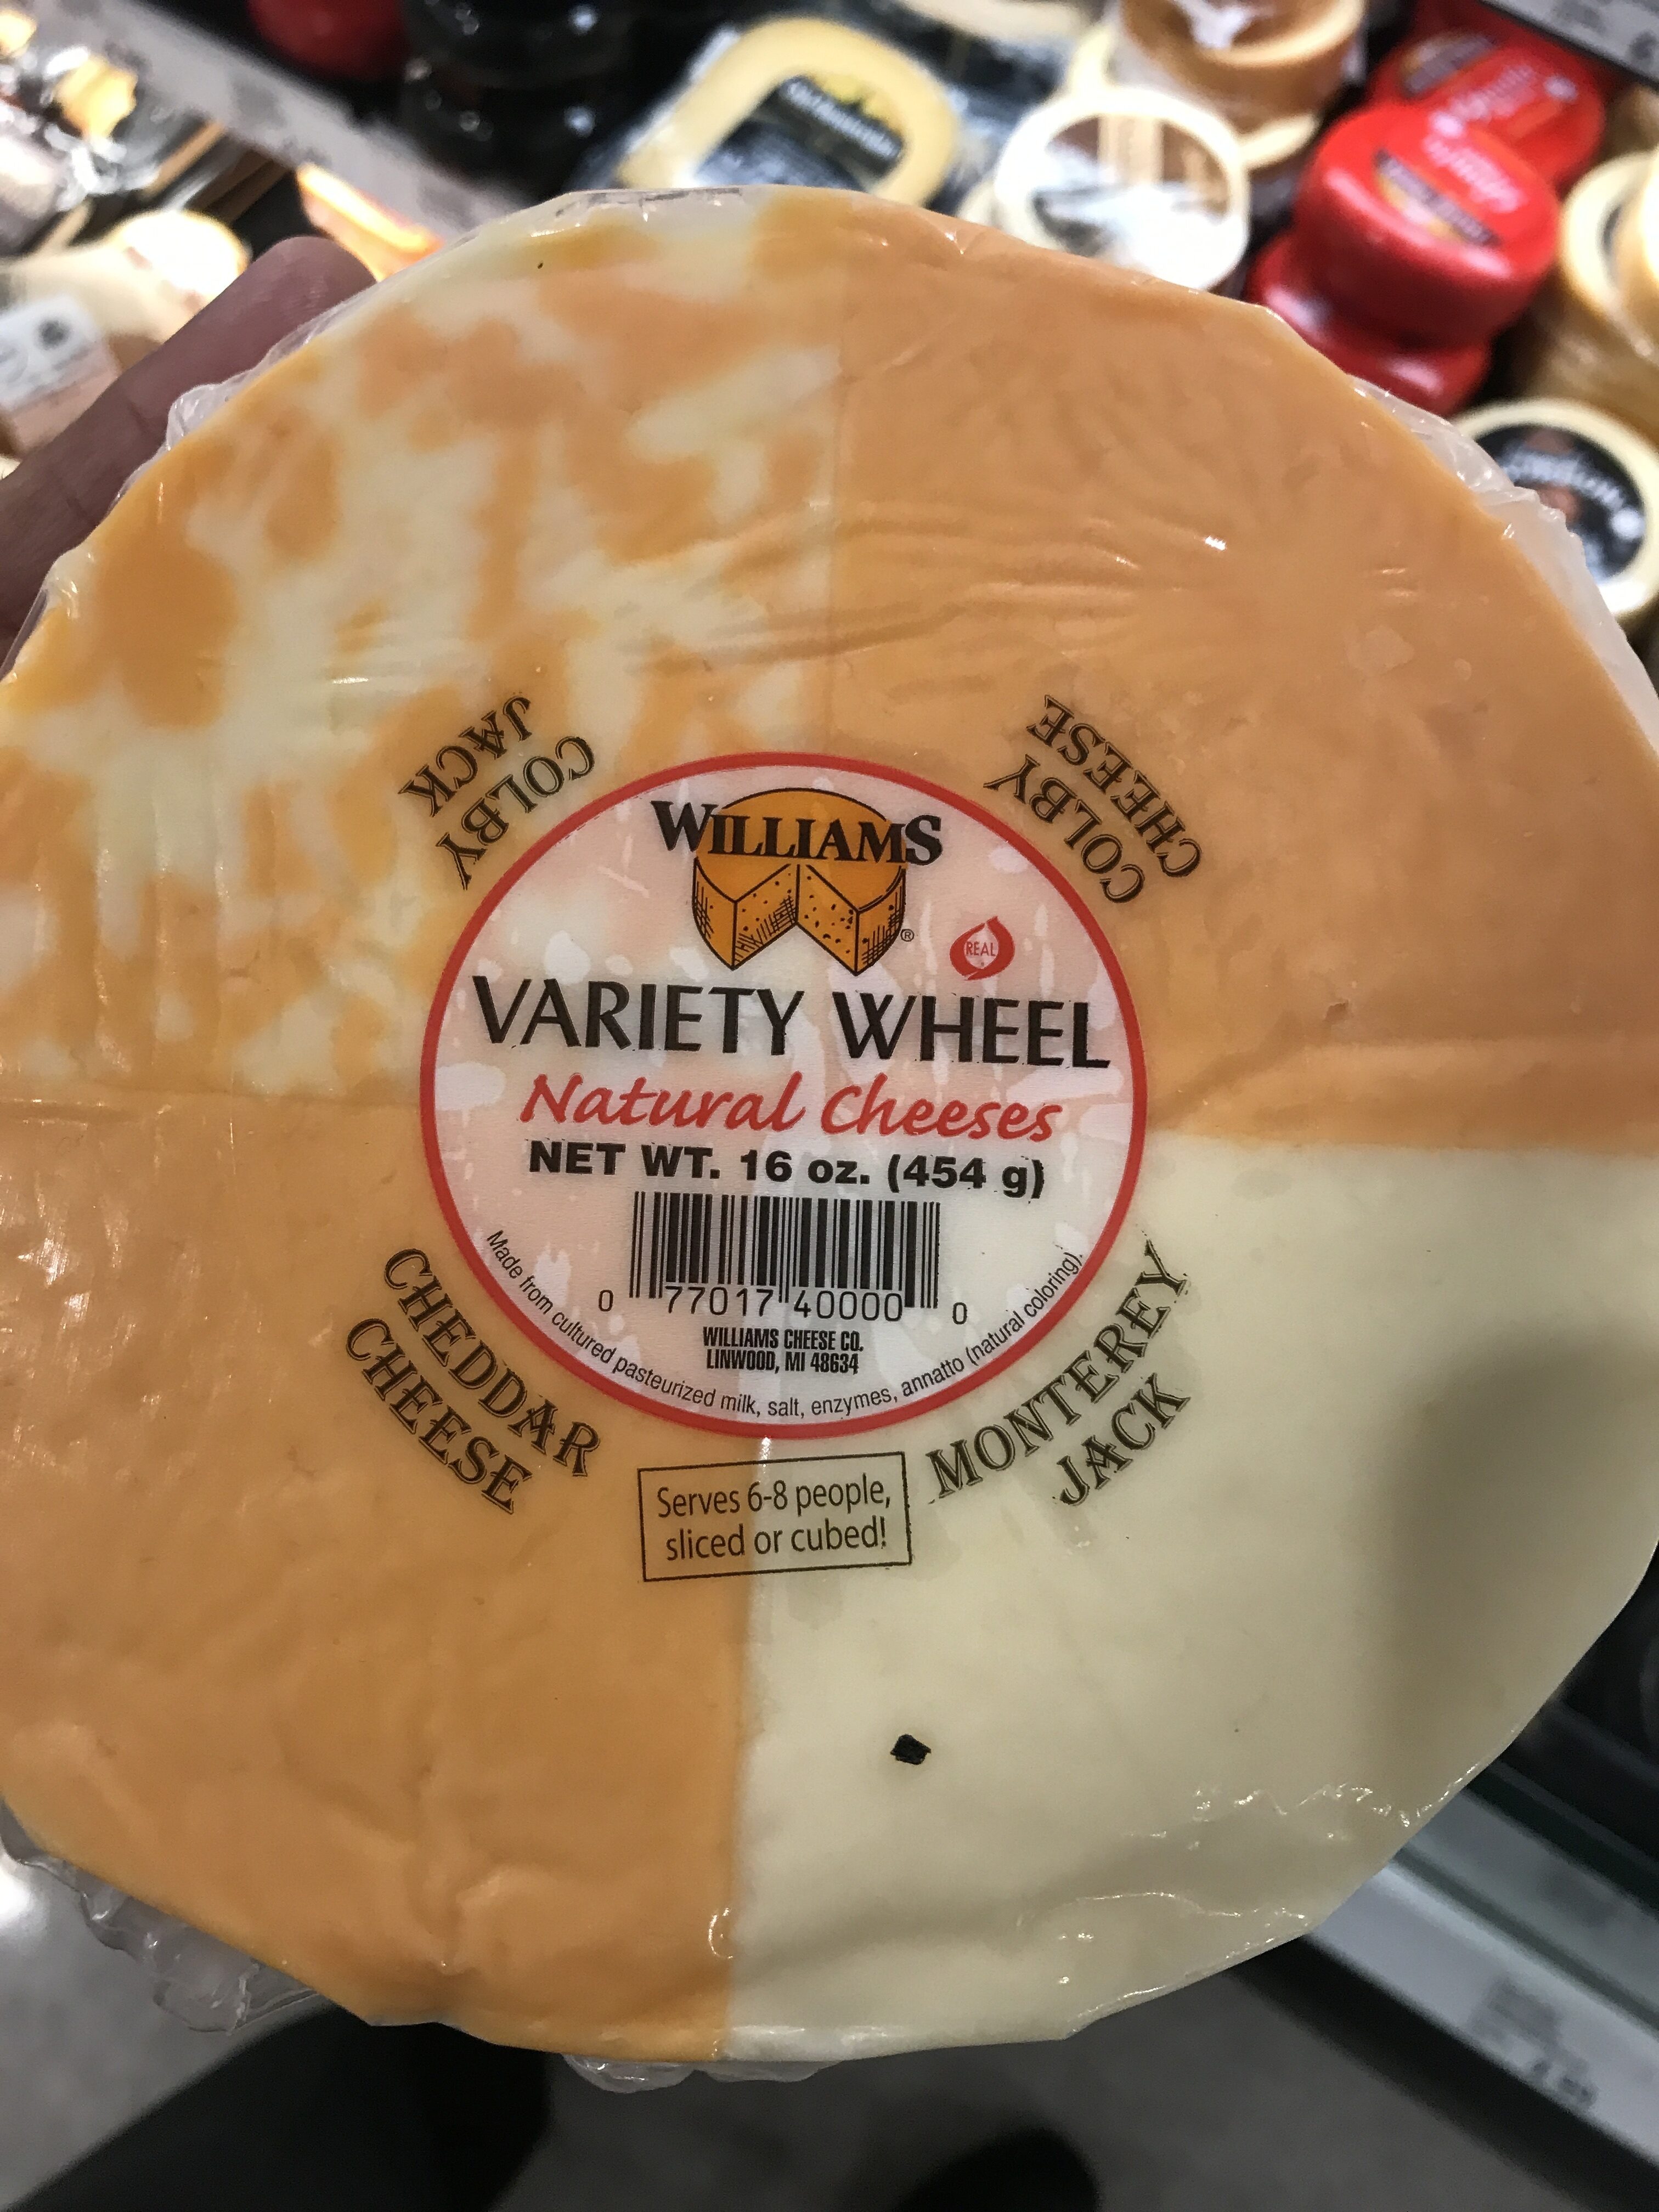 Williams, variety wheel natural cheeses - Product - en